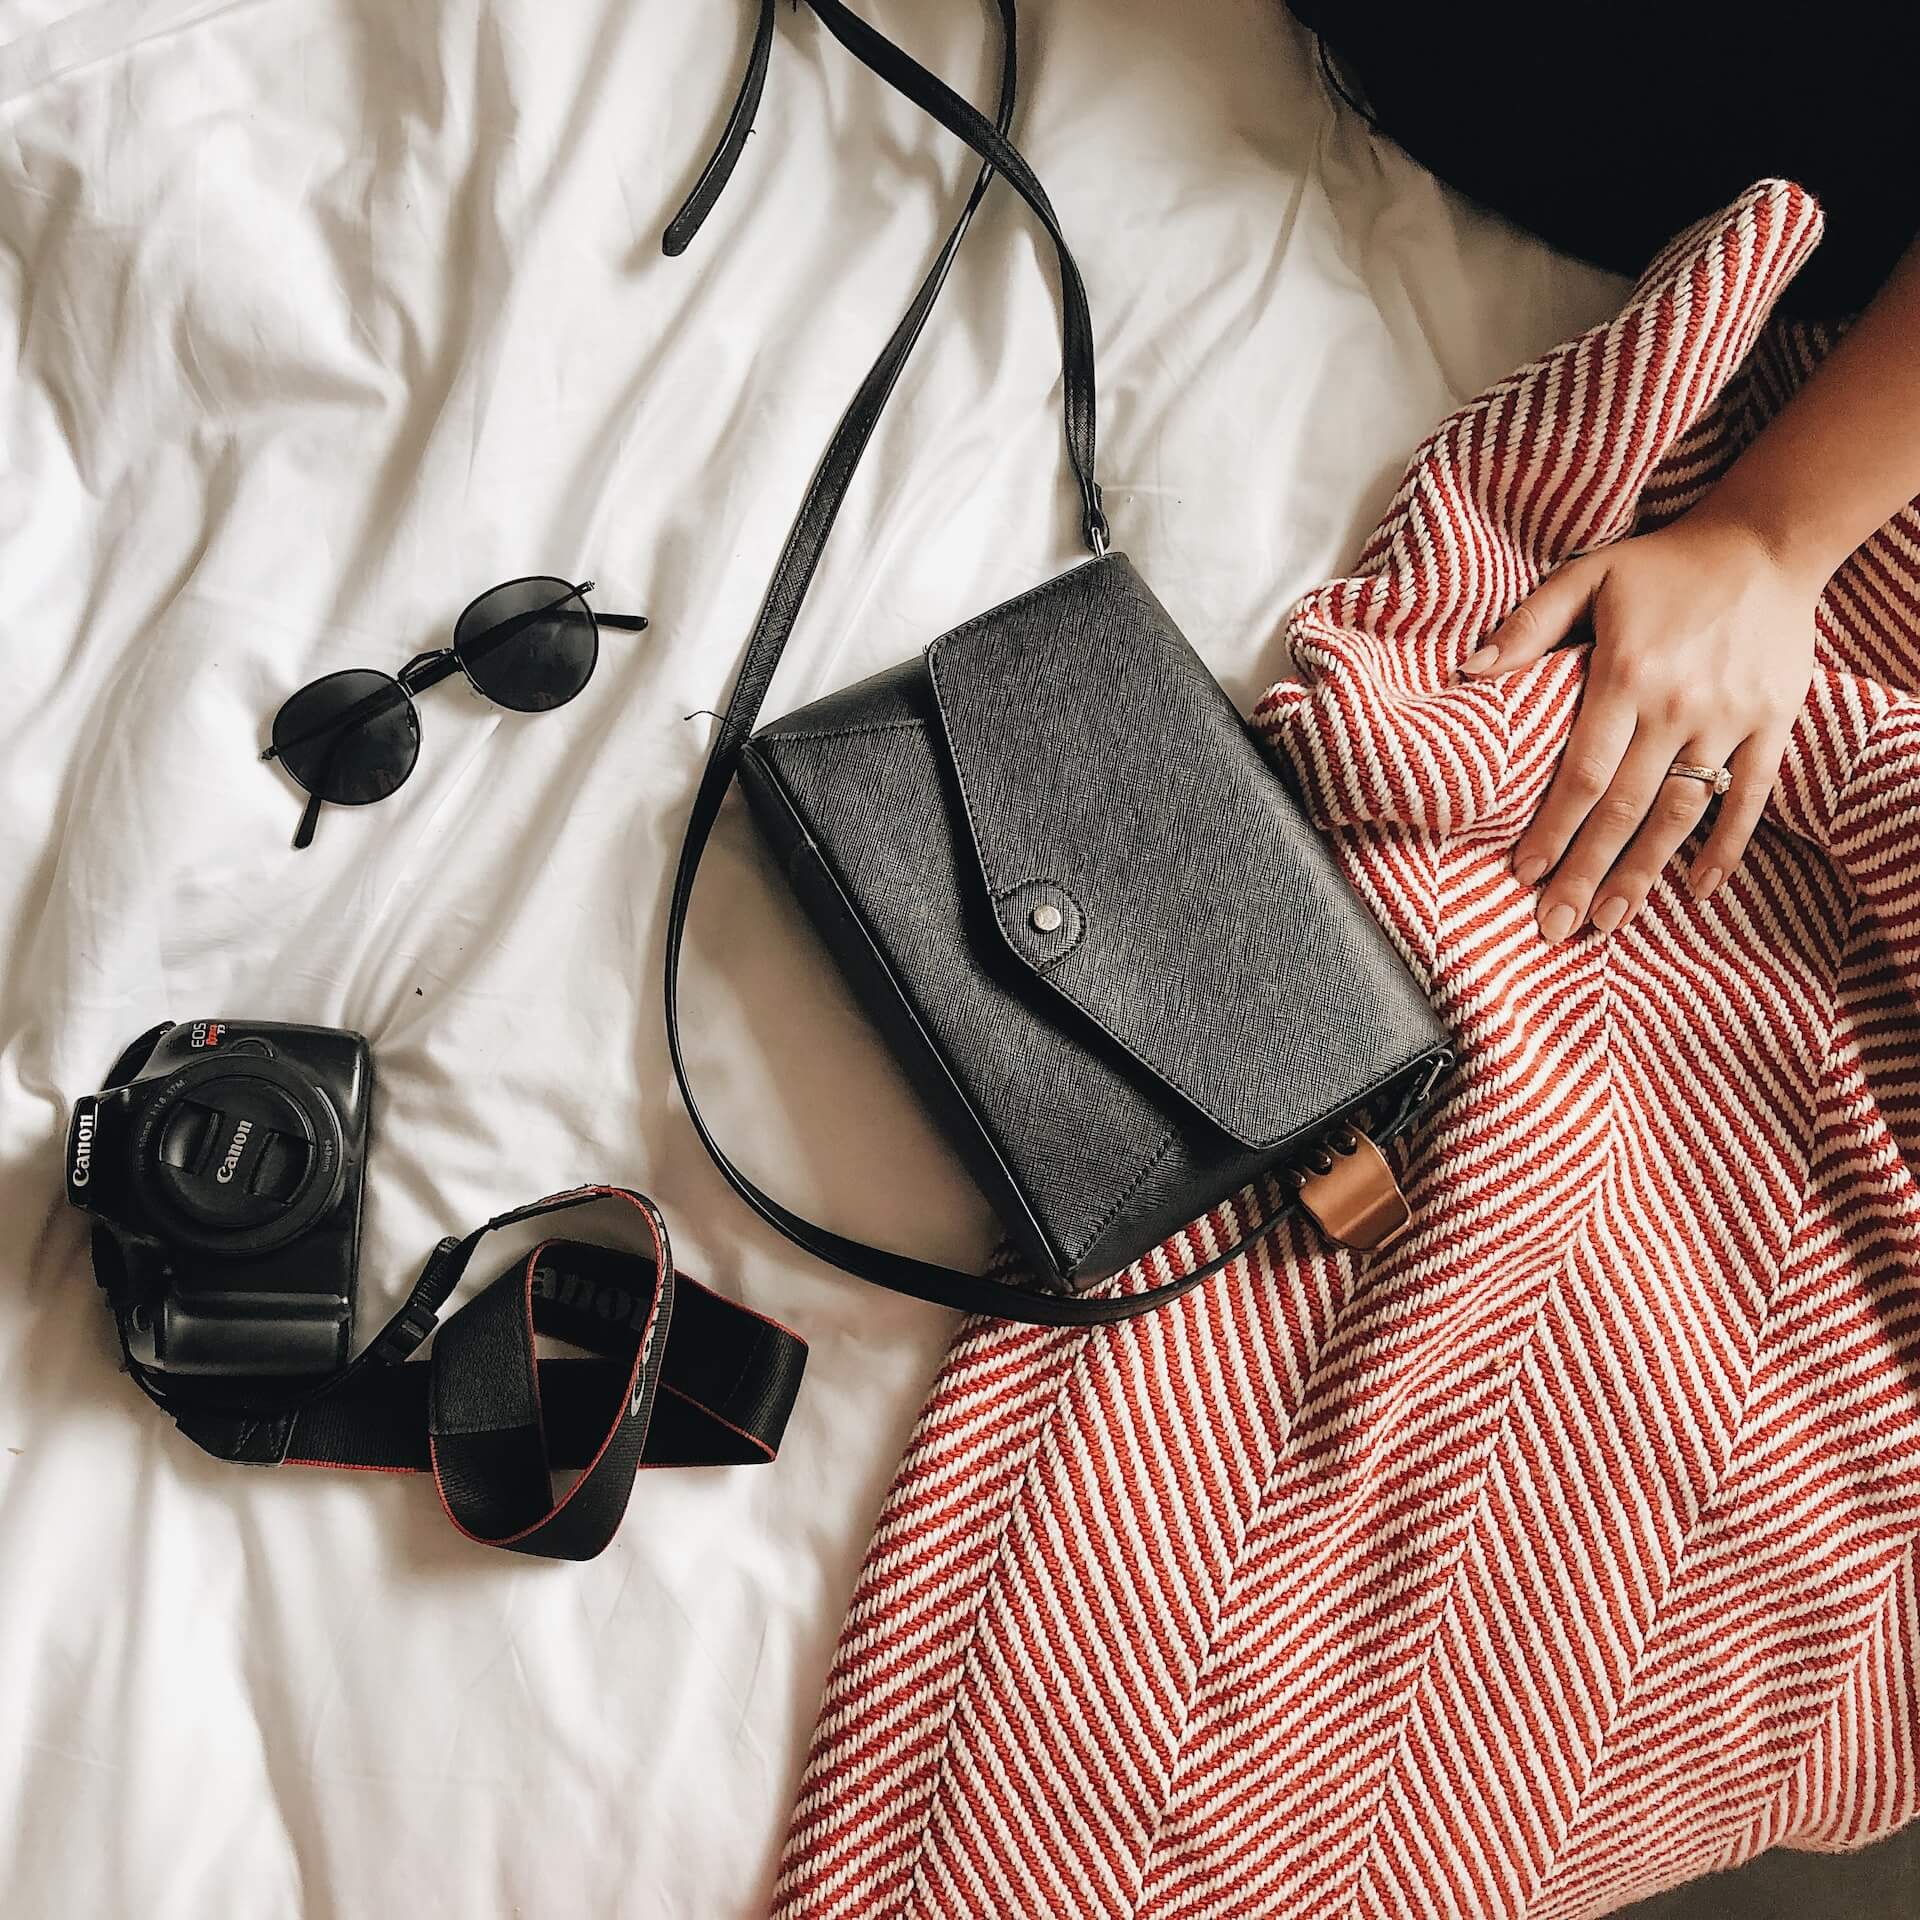 Black sunglasses, a black purse, and a DSLR camera lie on a bed comforter